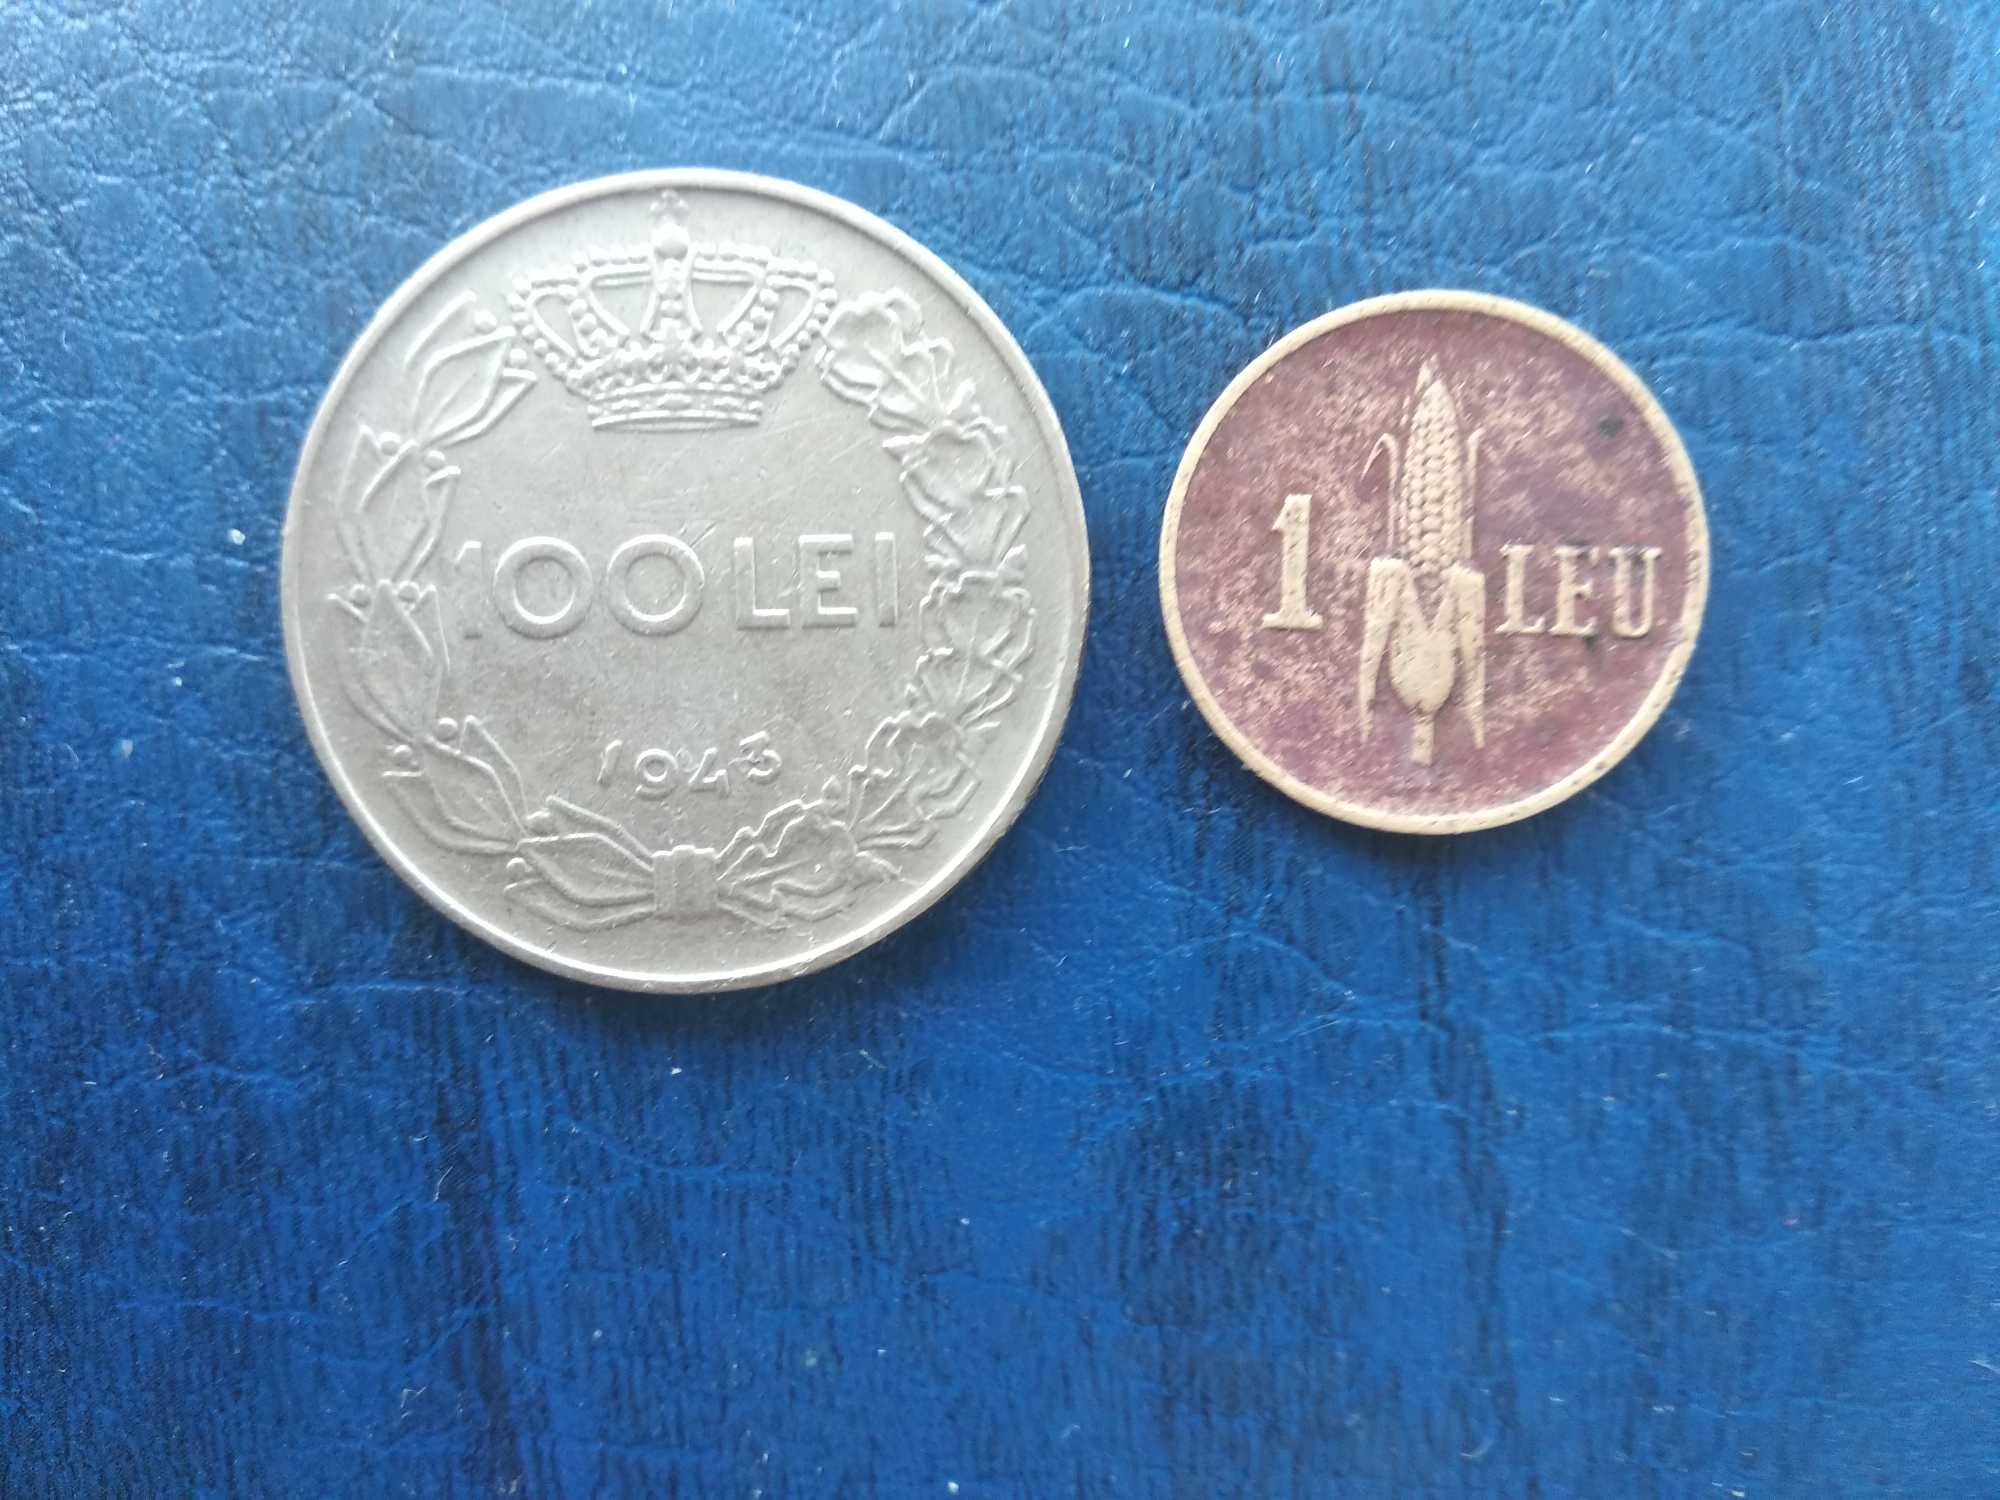 Монеты Румынии 1943-2016гг.